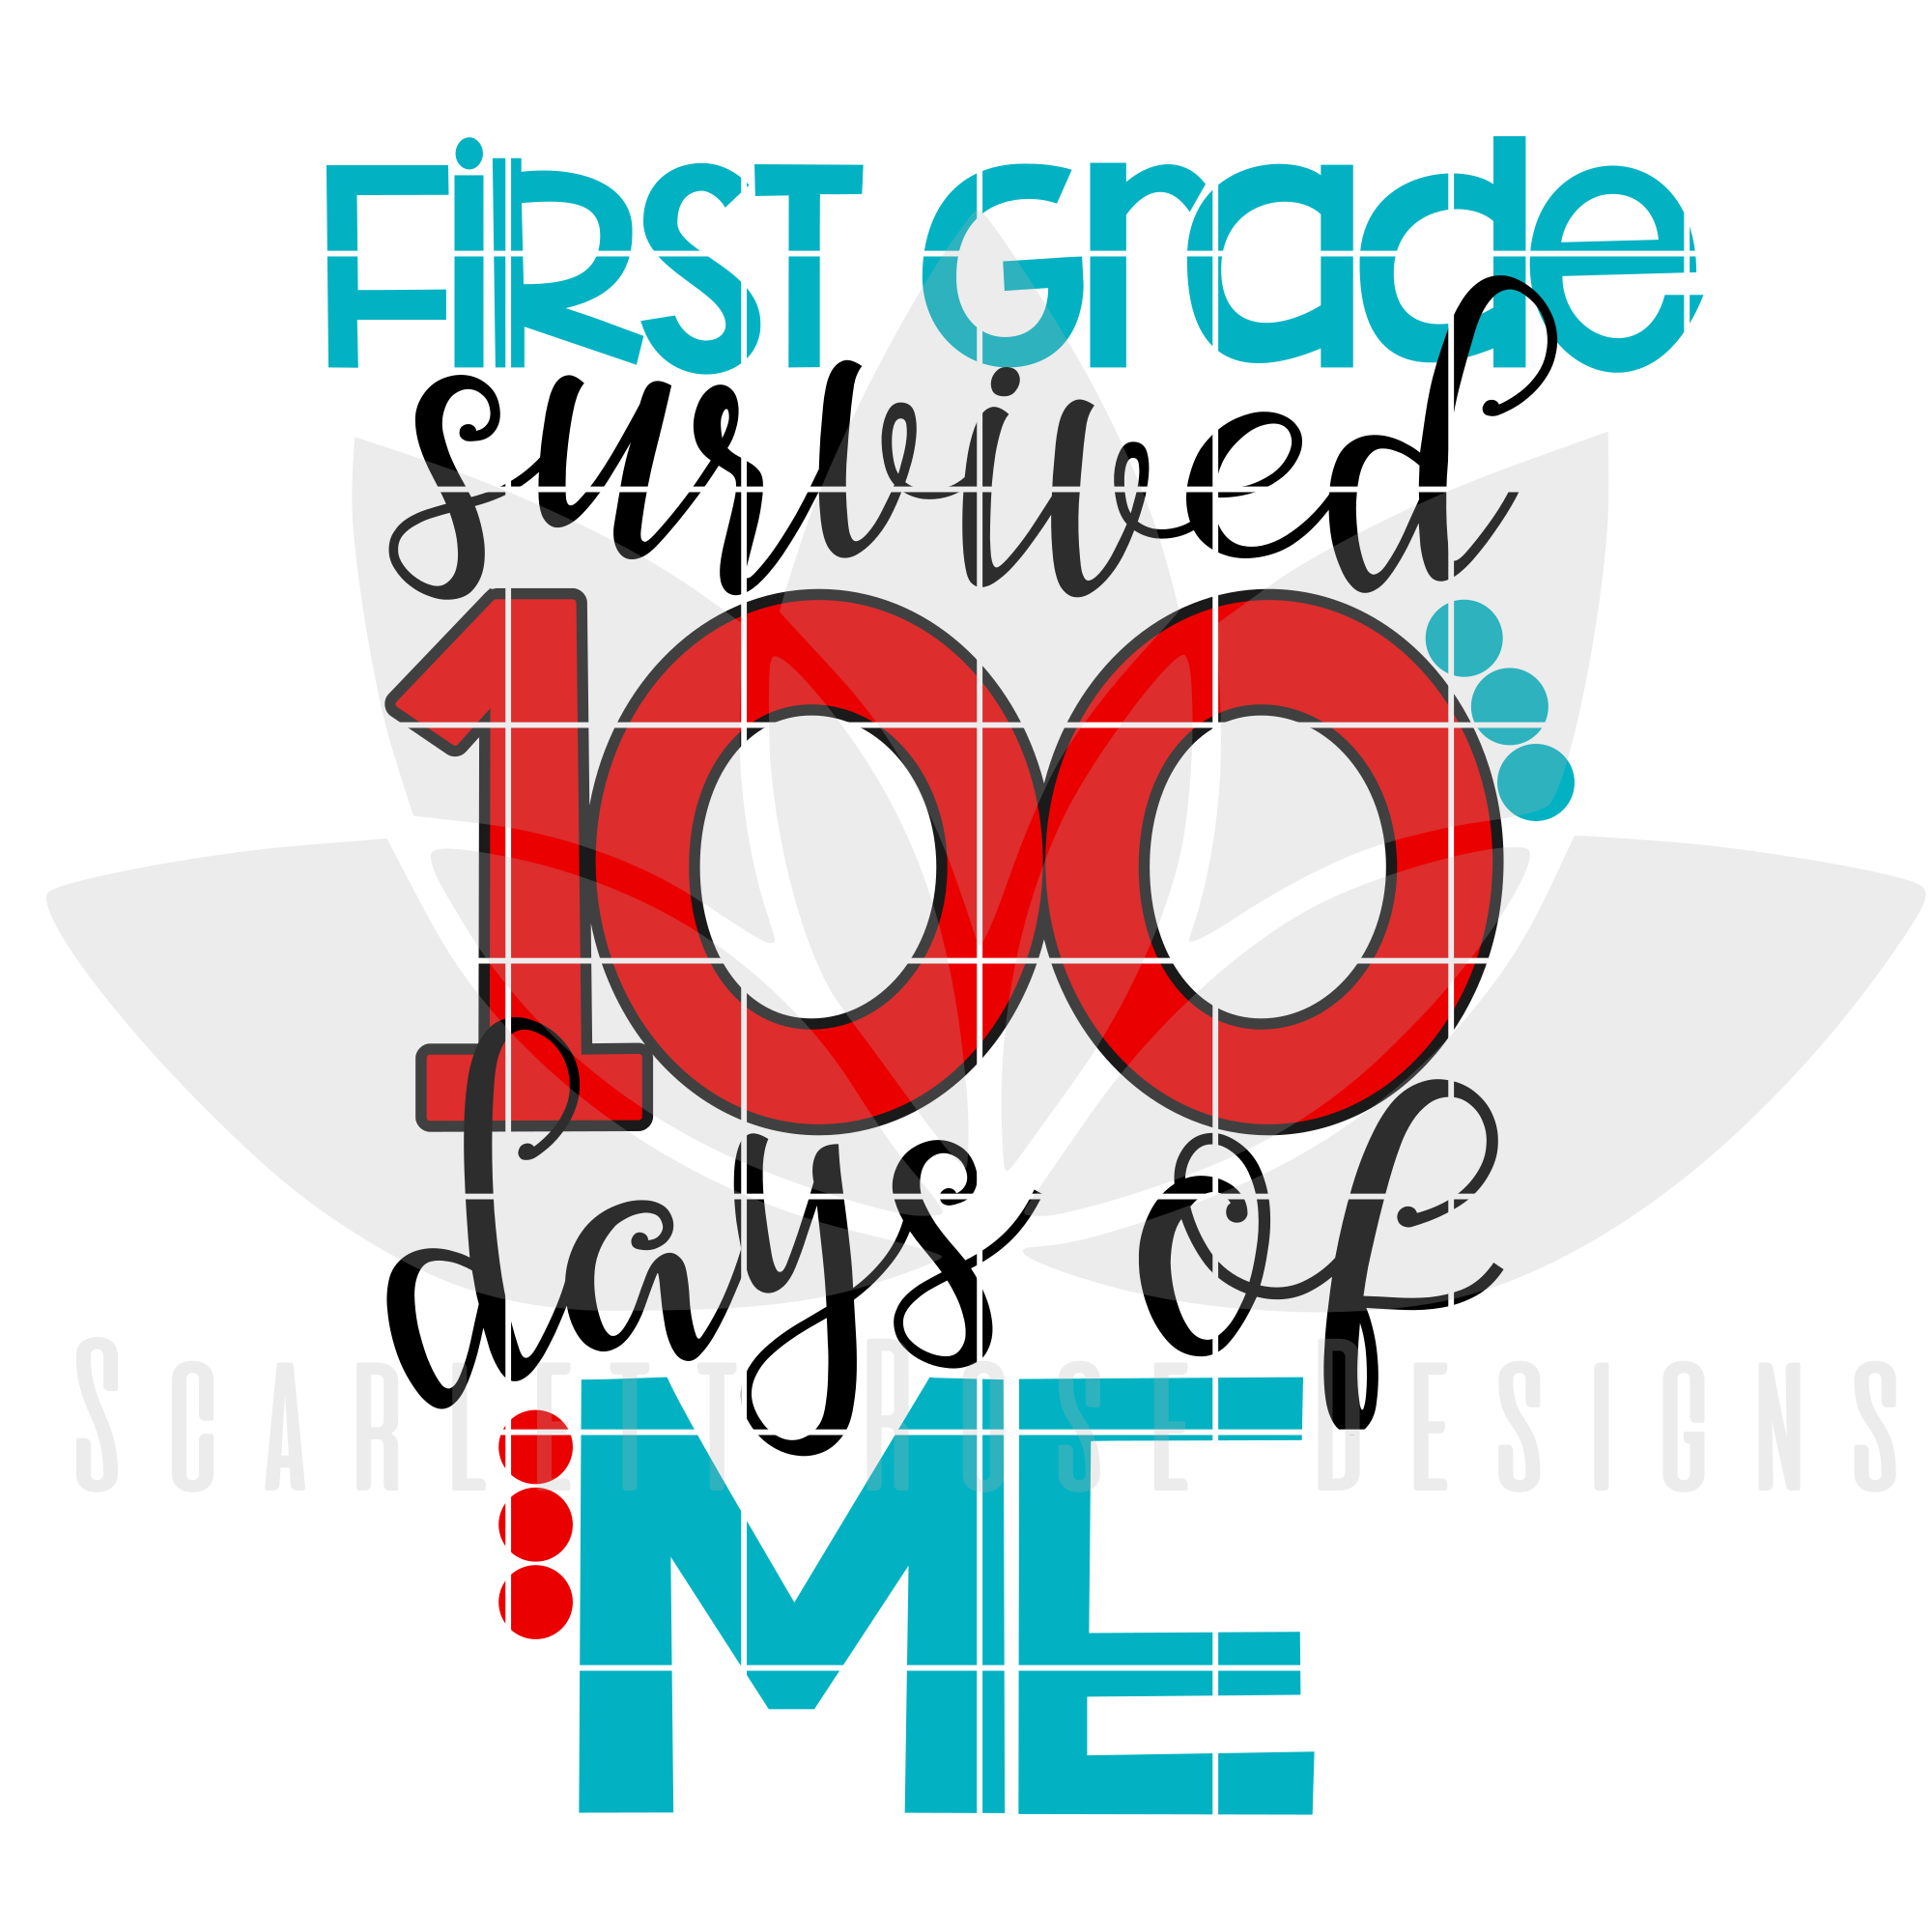 among us 100 days of school svg